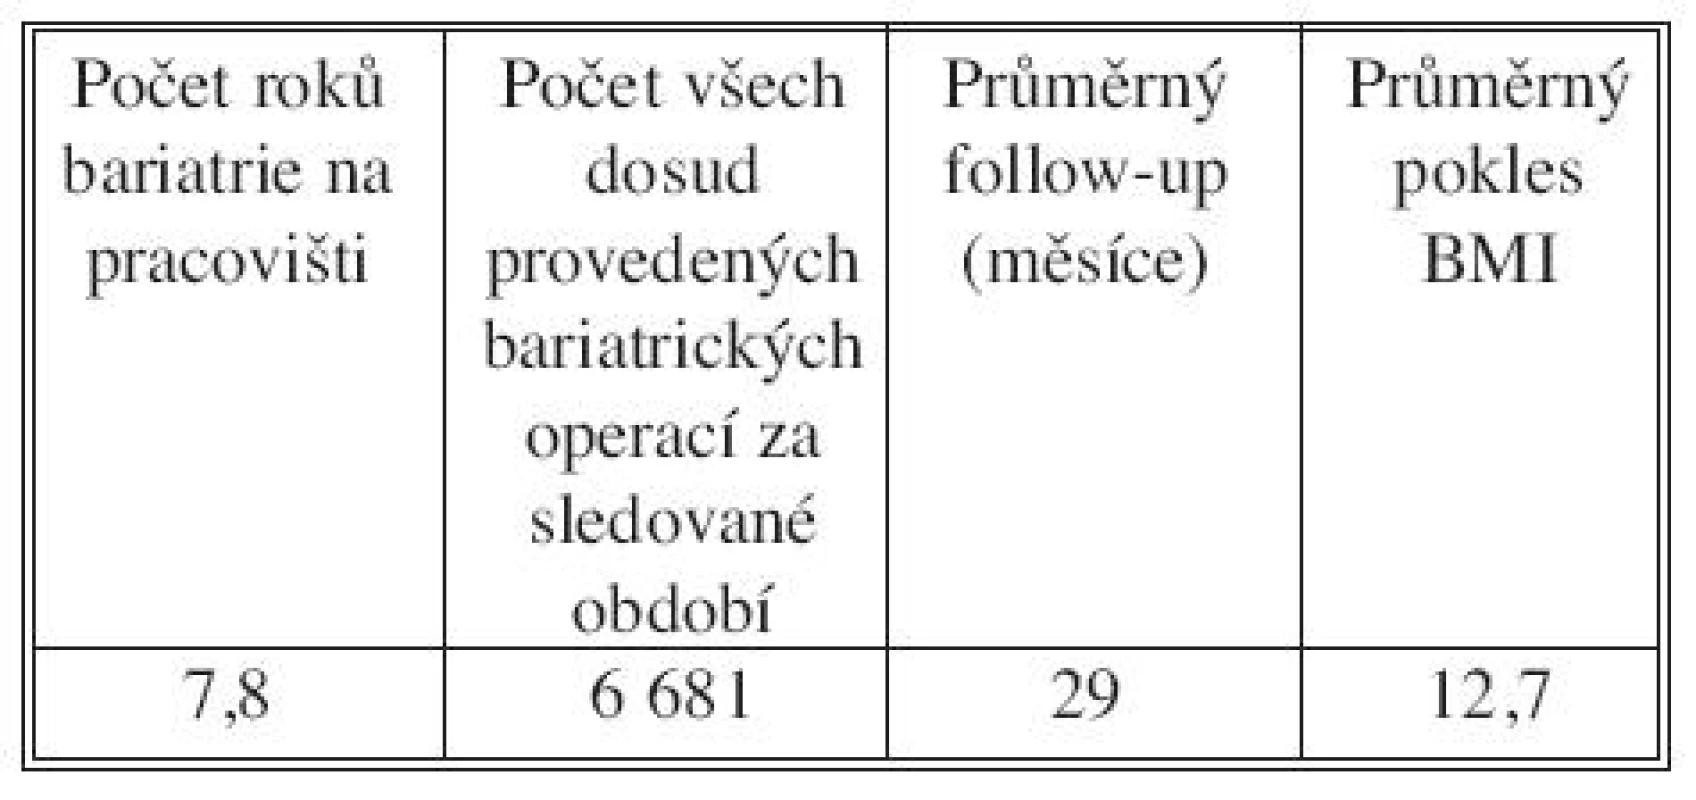 Souhrnná tabulka české bariatrie v letech 1983–2009
Tab. 1. Tabulated summary of the Czech bariatry in1983–2009